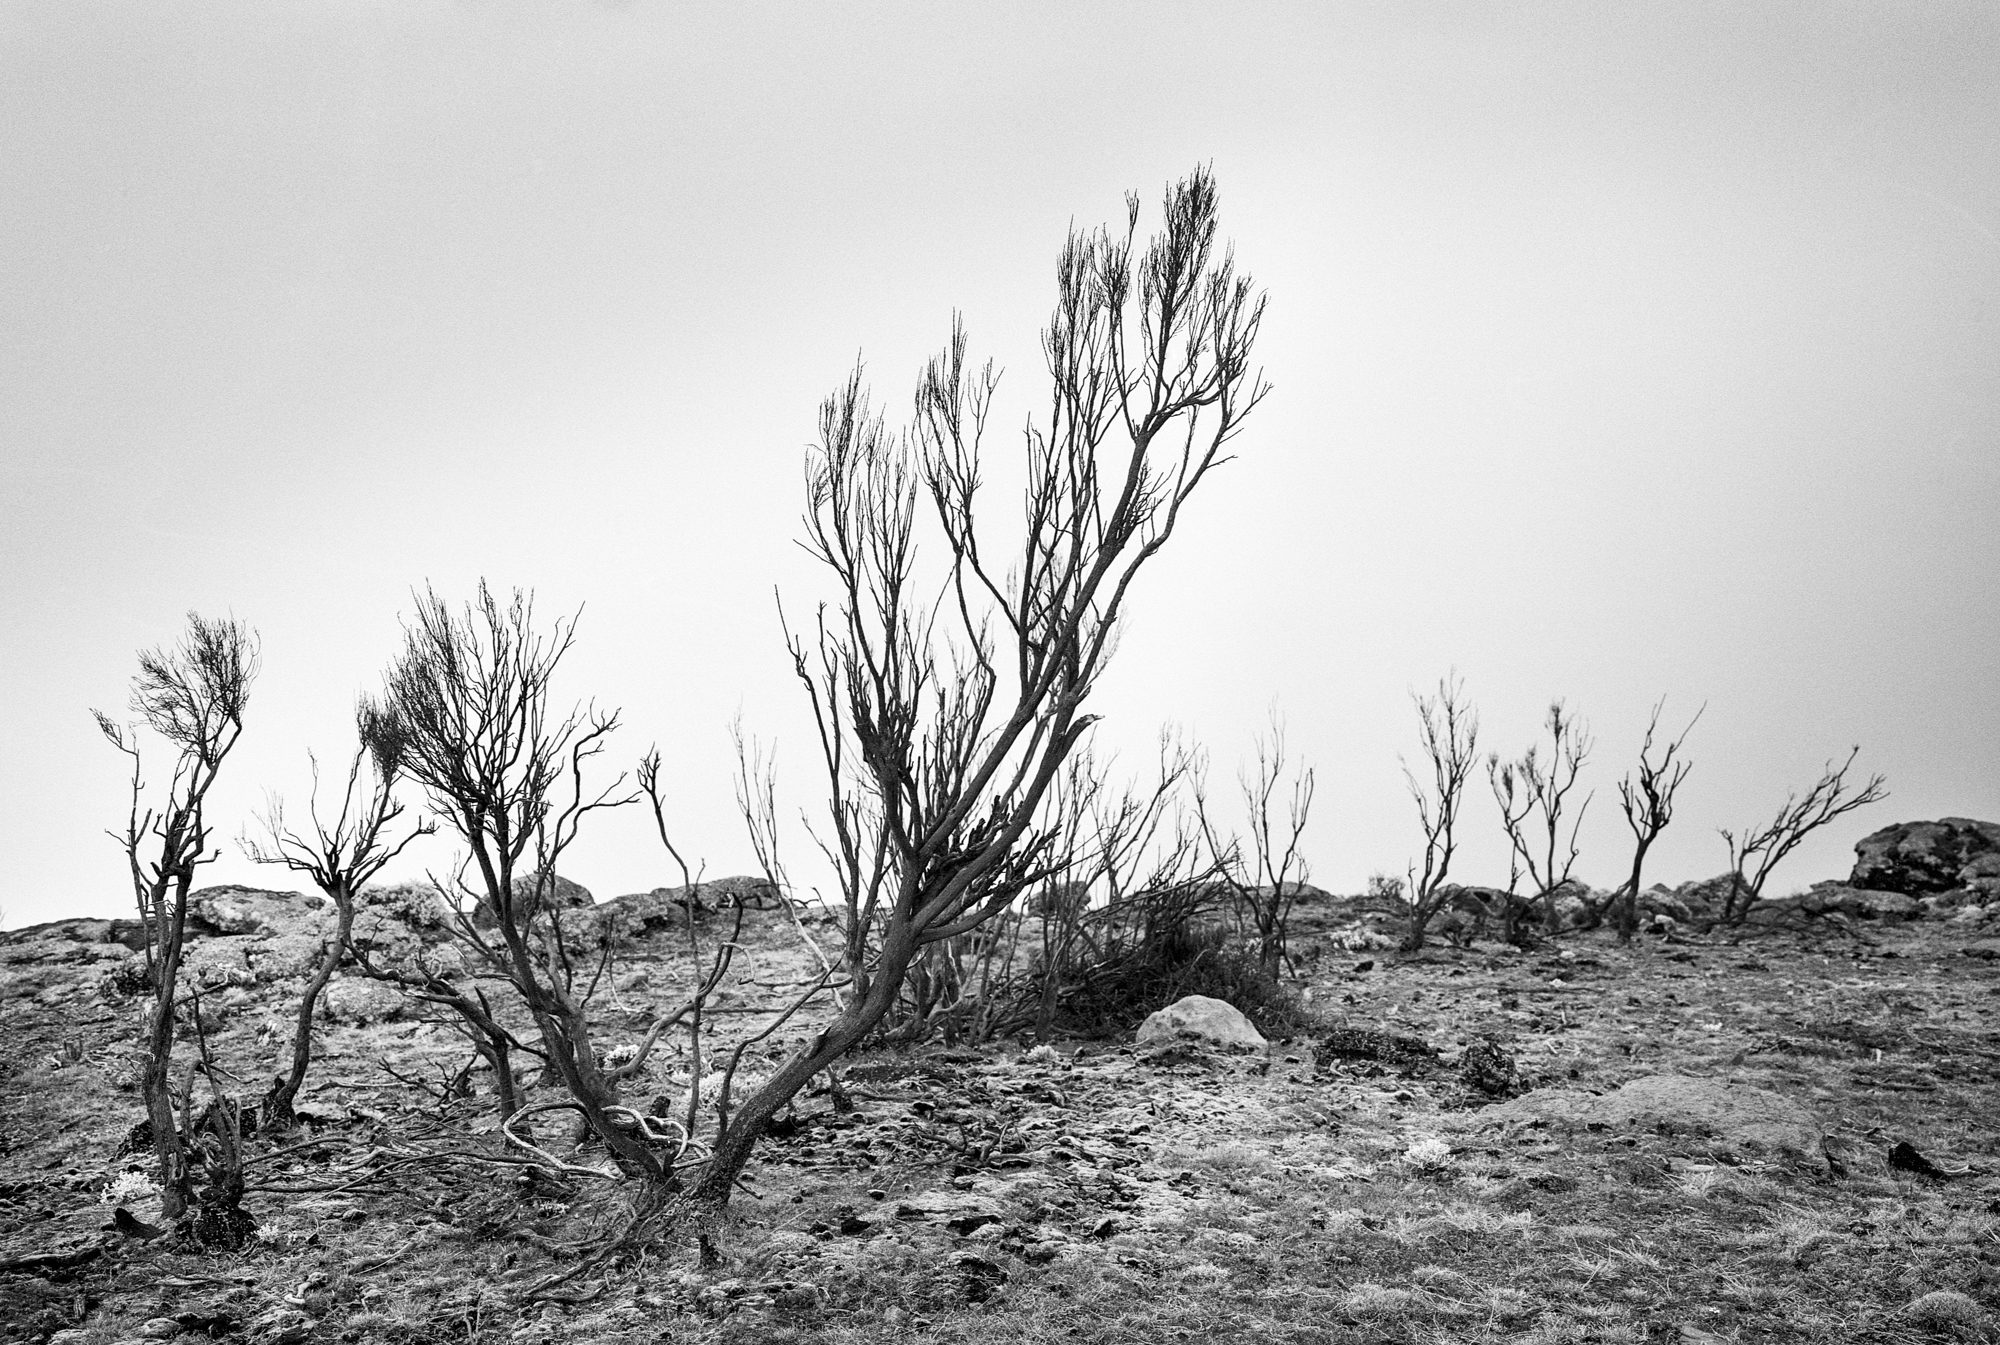 Black & white film photograph by Corey Hart shot on ILFORD HP5+ Sanetti Plateau 10